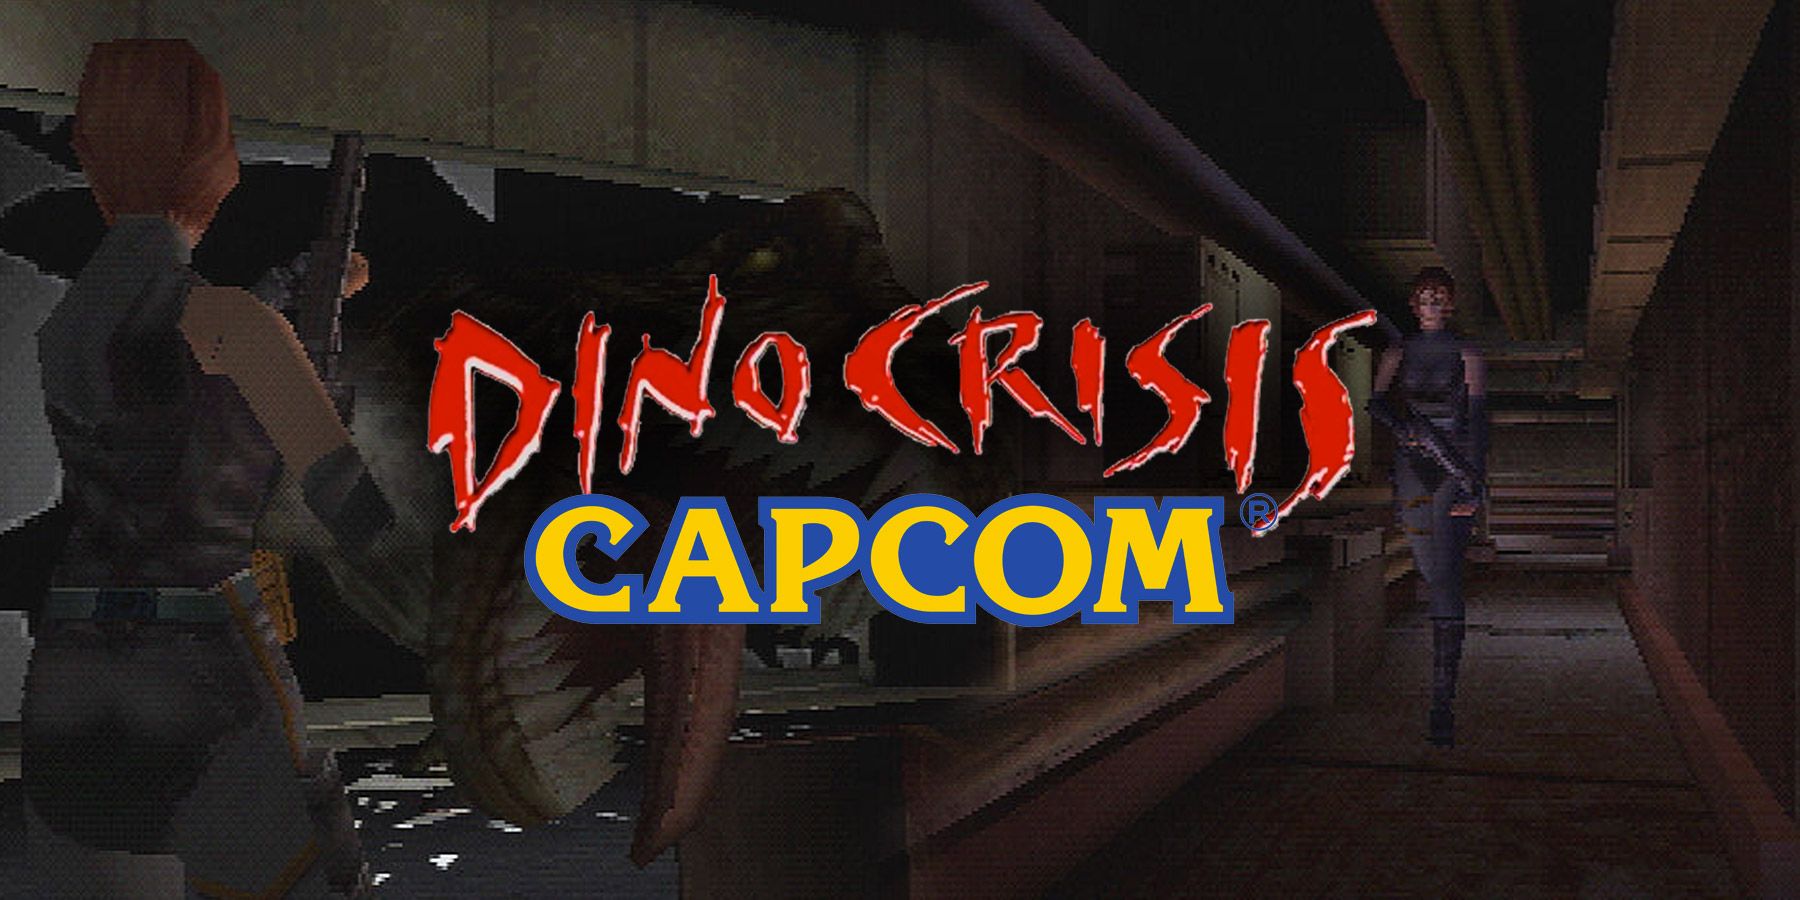 Nota de Dino Crisis 3 - Nota do Game